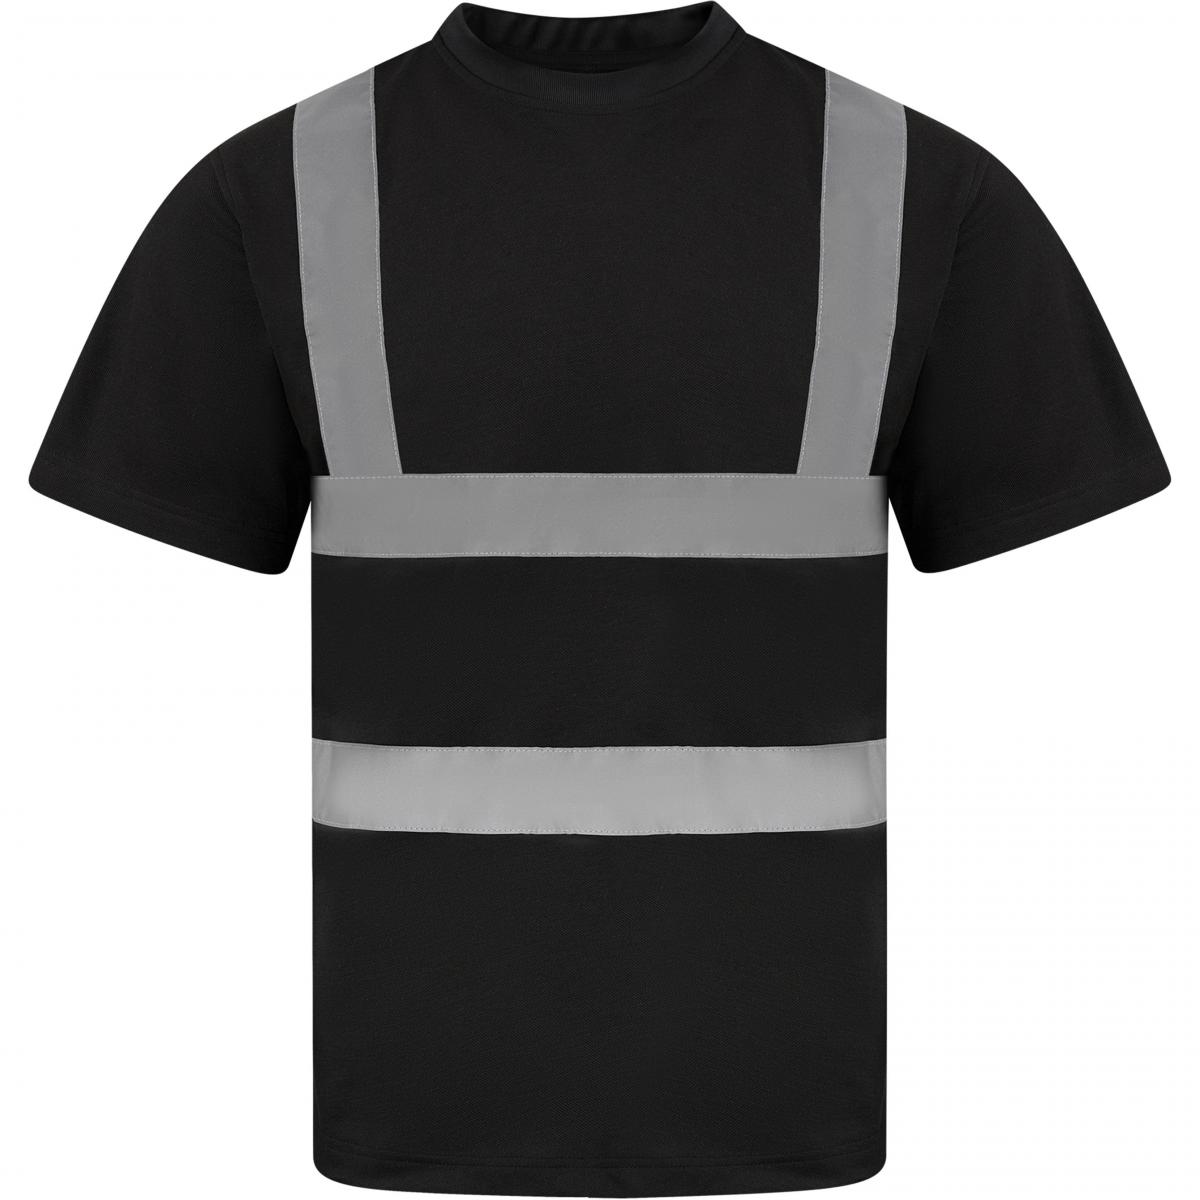 Hersteller: Korntex Herstellernummer: KXPCSHIRT Artikelbezeichnung: Herren Shirt Blended fabric T-Shirt, EN ISO 20471:2013 Farbe: Black